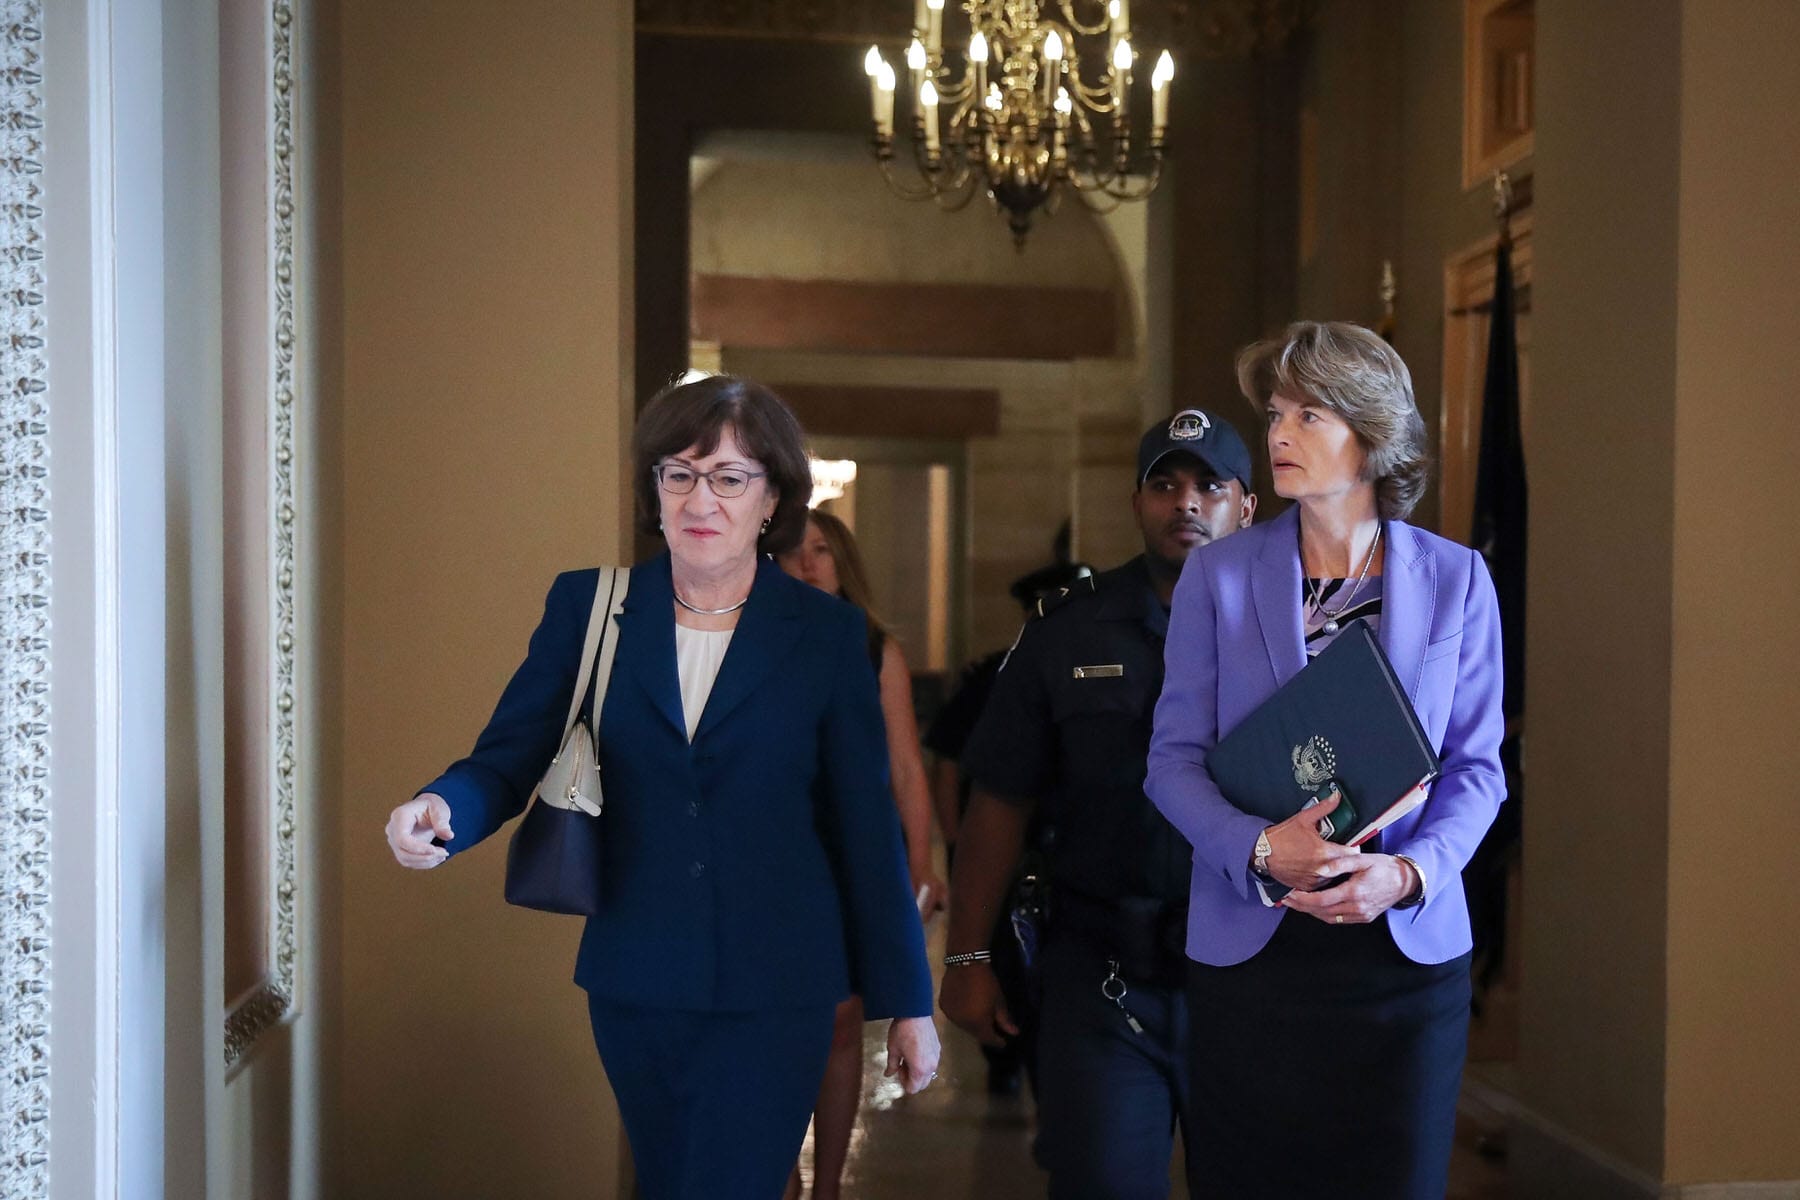 Sen. Susan Collins (R-ME) and Sen. Lisa Murkowski (R-AK) walk together down a hallway.